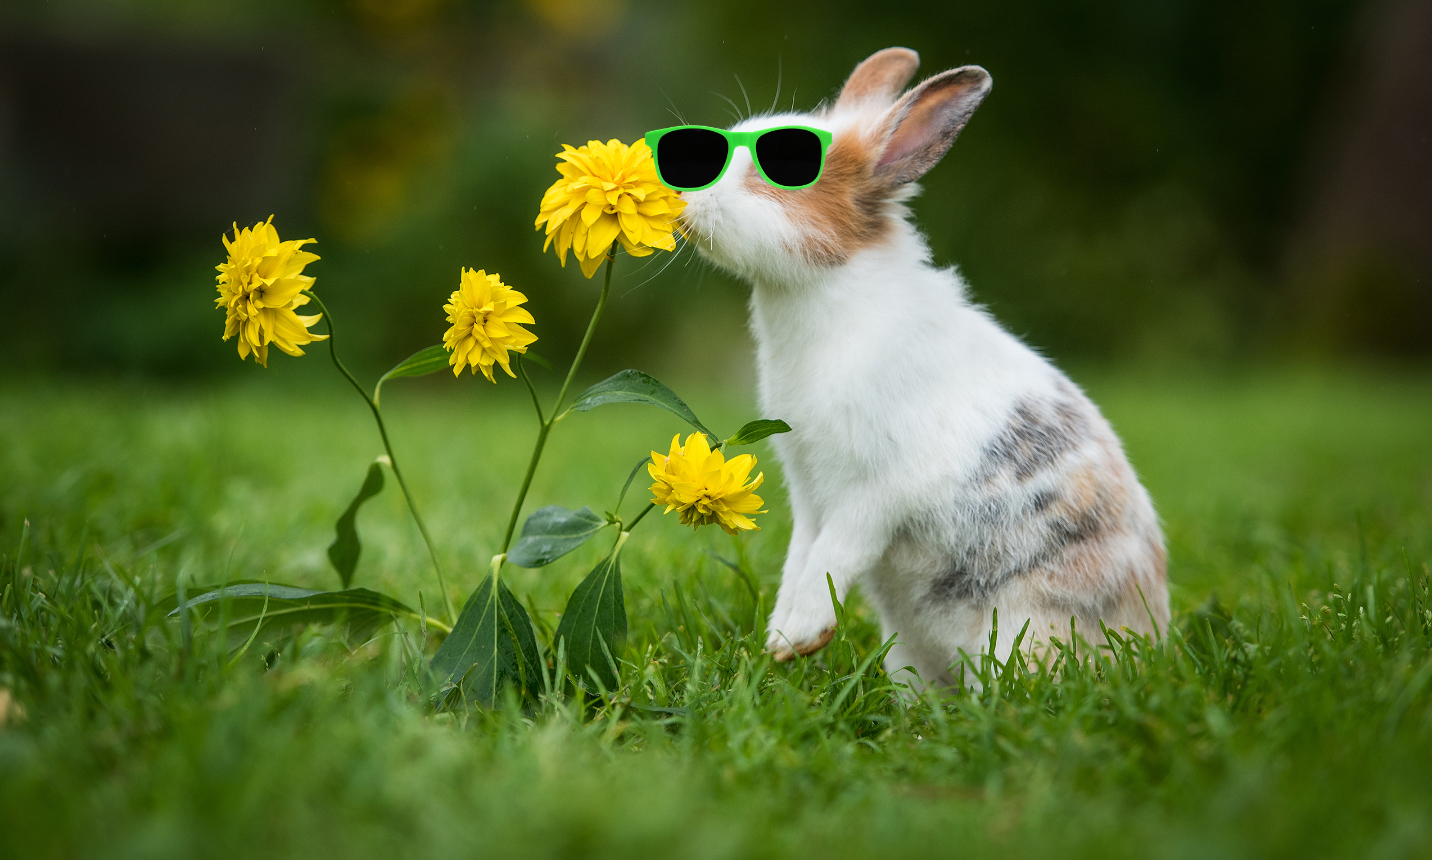 Rabbit in sunglasses